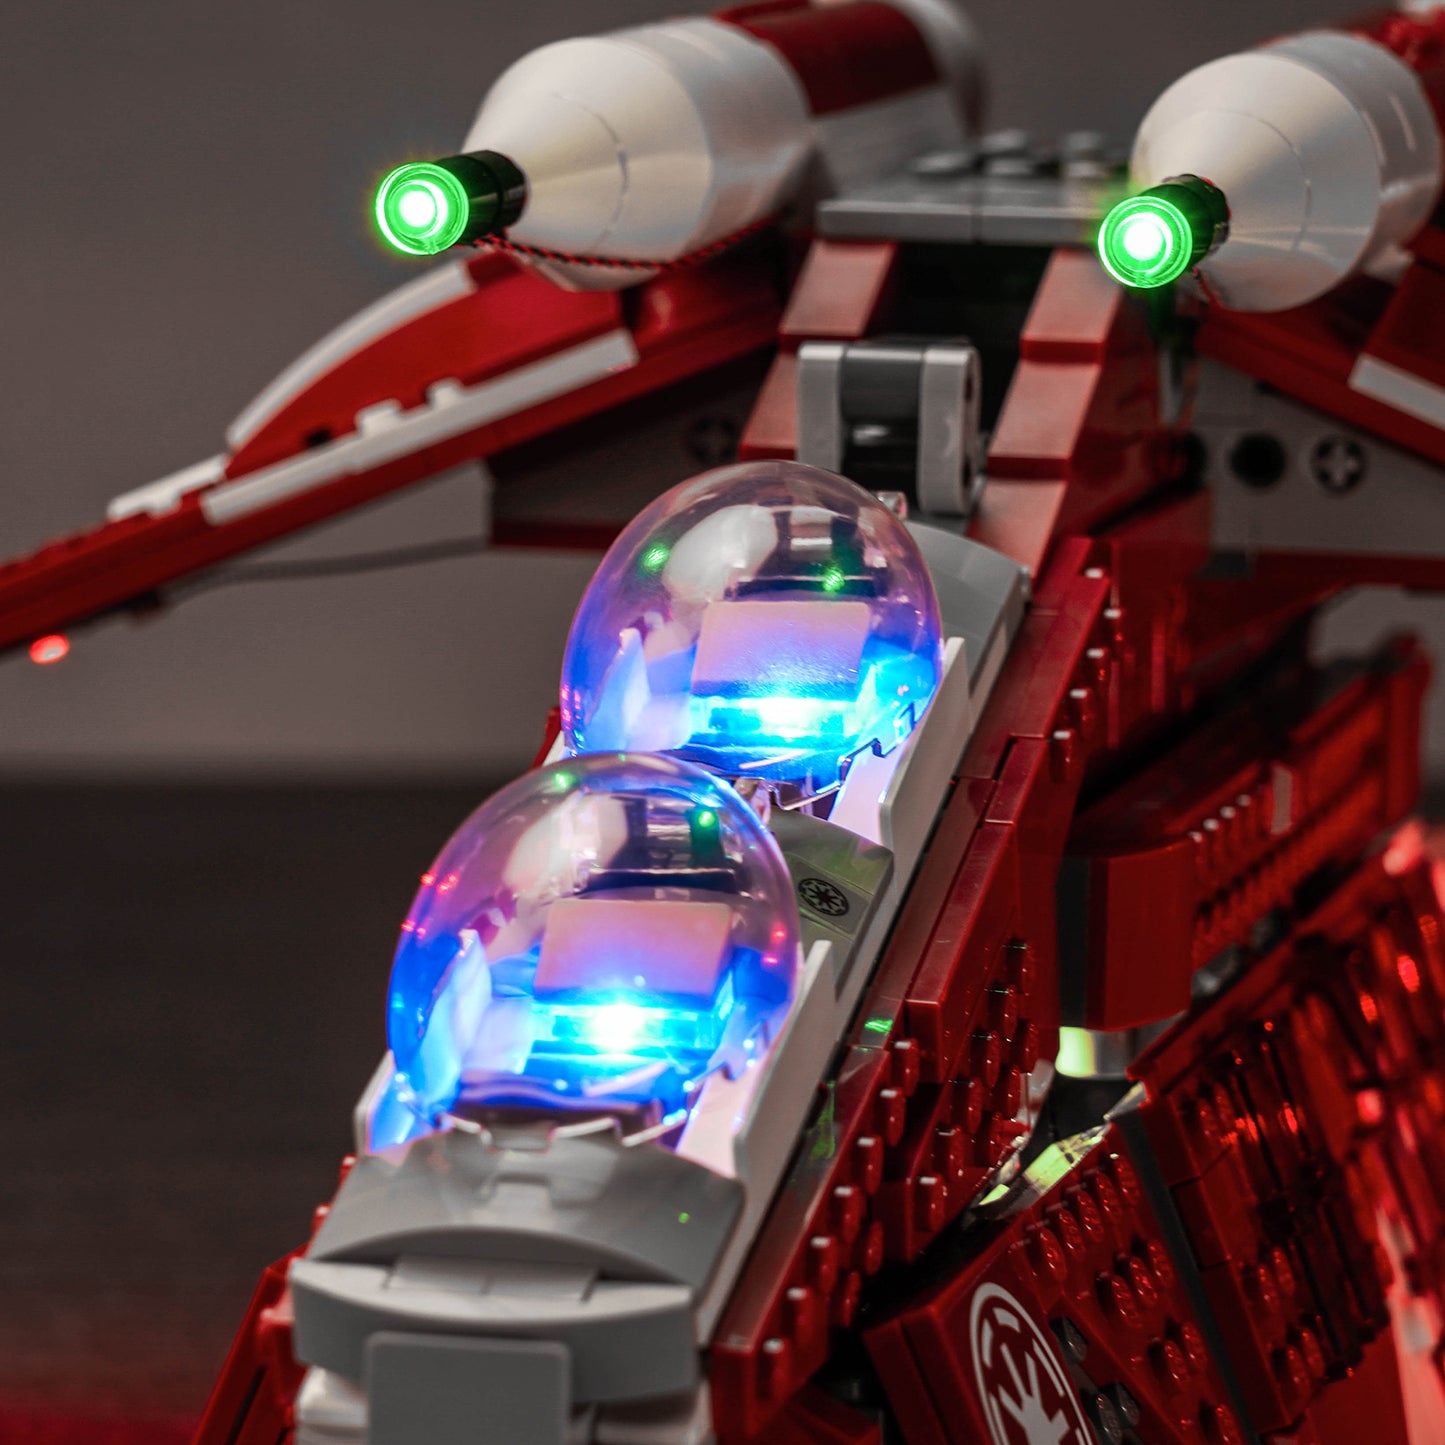 icuanuty LED light kit£¬ lego 75354 Star Wars new coruscant guard gunship£¬lego lighting & light kits